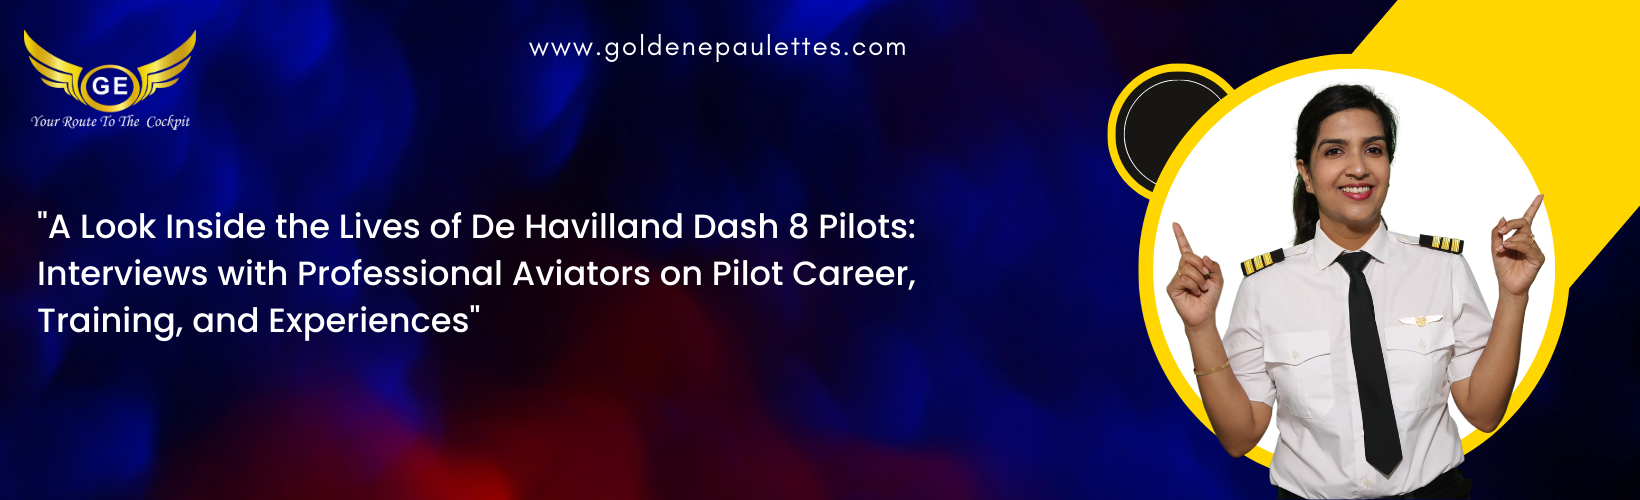 De Havilland Dash 8 Pilot Interviews